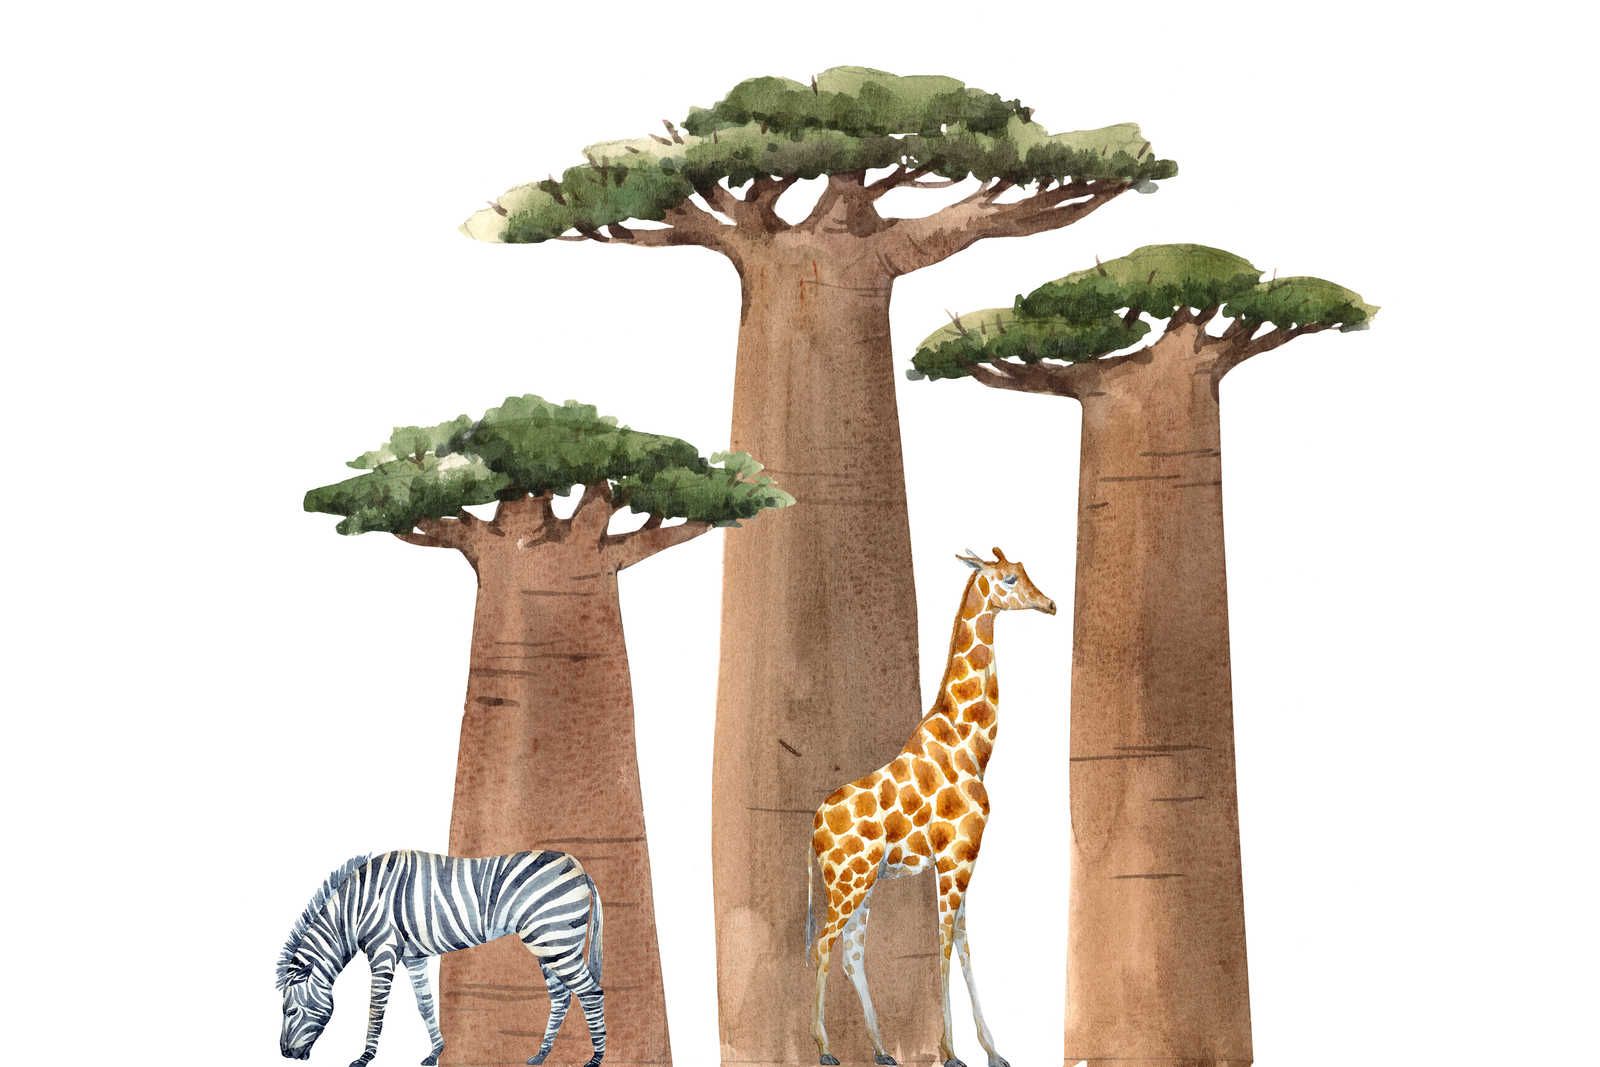             Canvas Savannah met Giraffe en Zebra - 90 cm x 60 cm
        